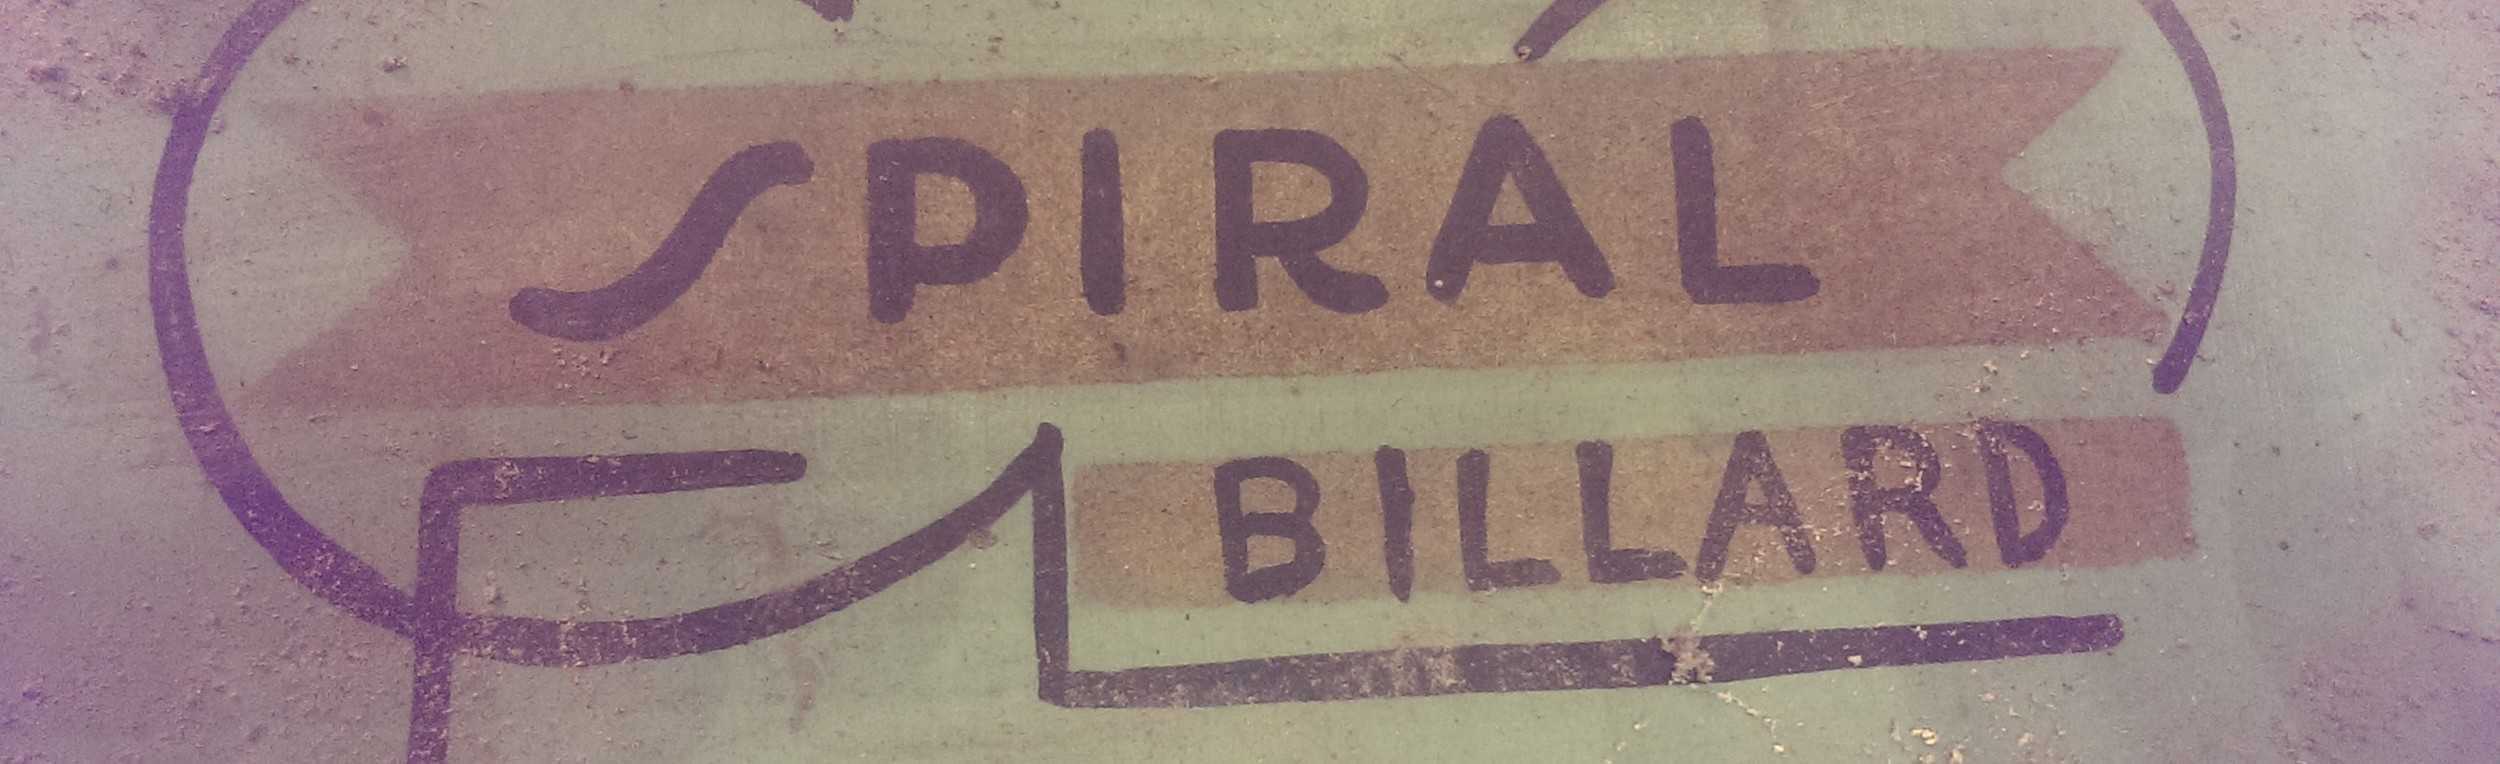 Spiral-Billard_logo-before